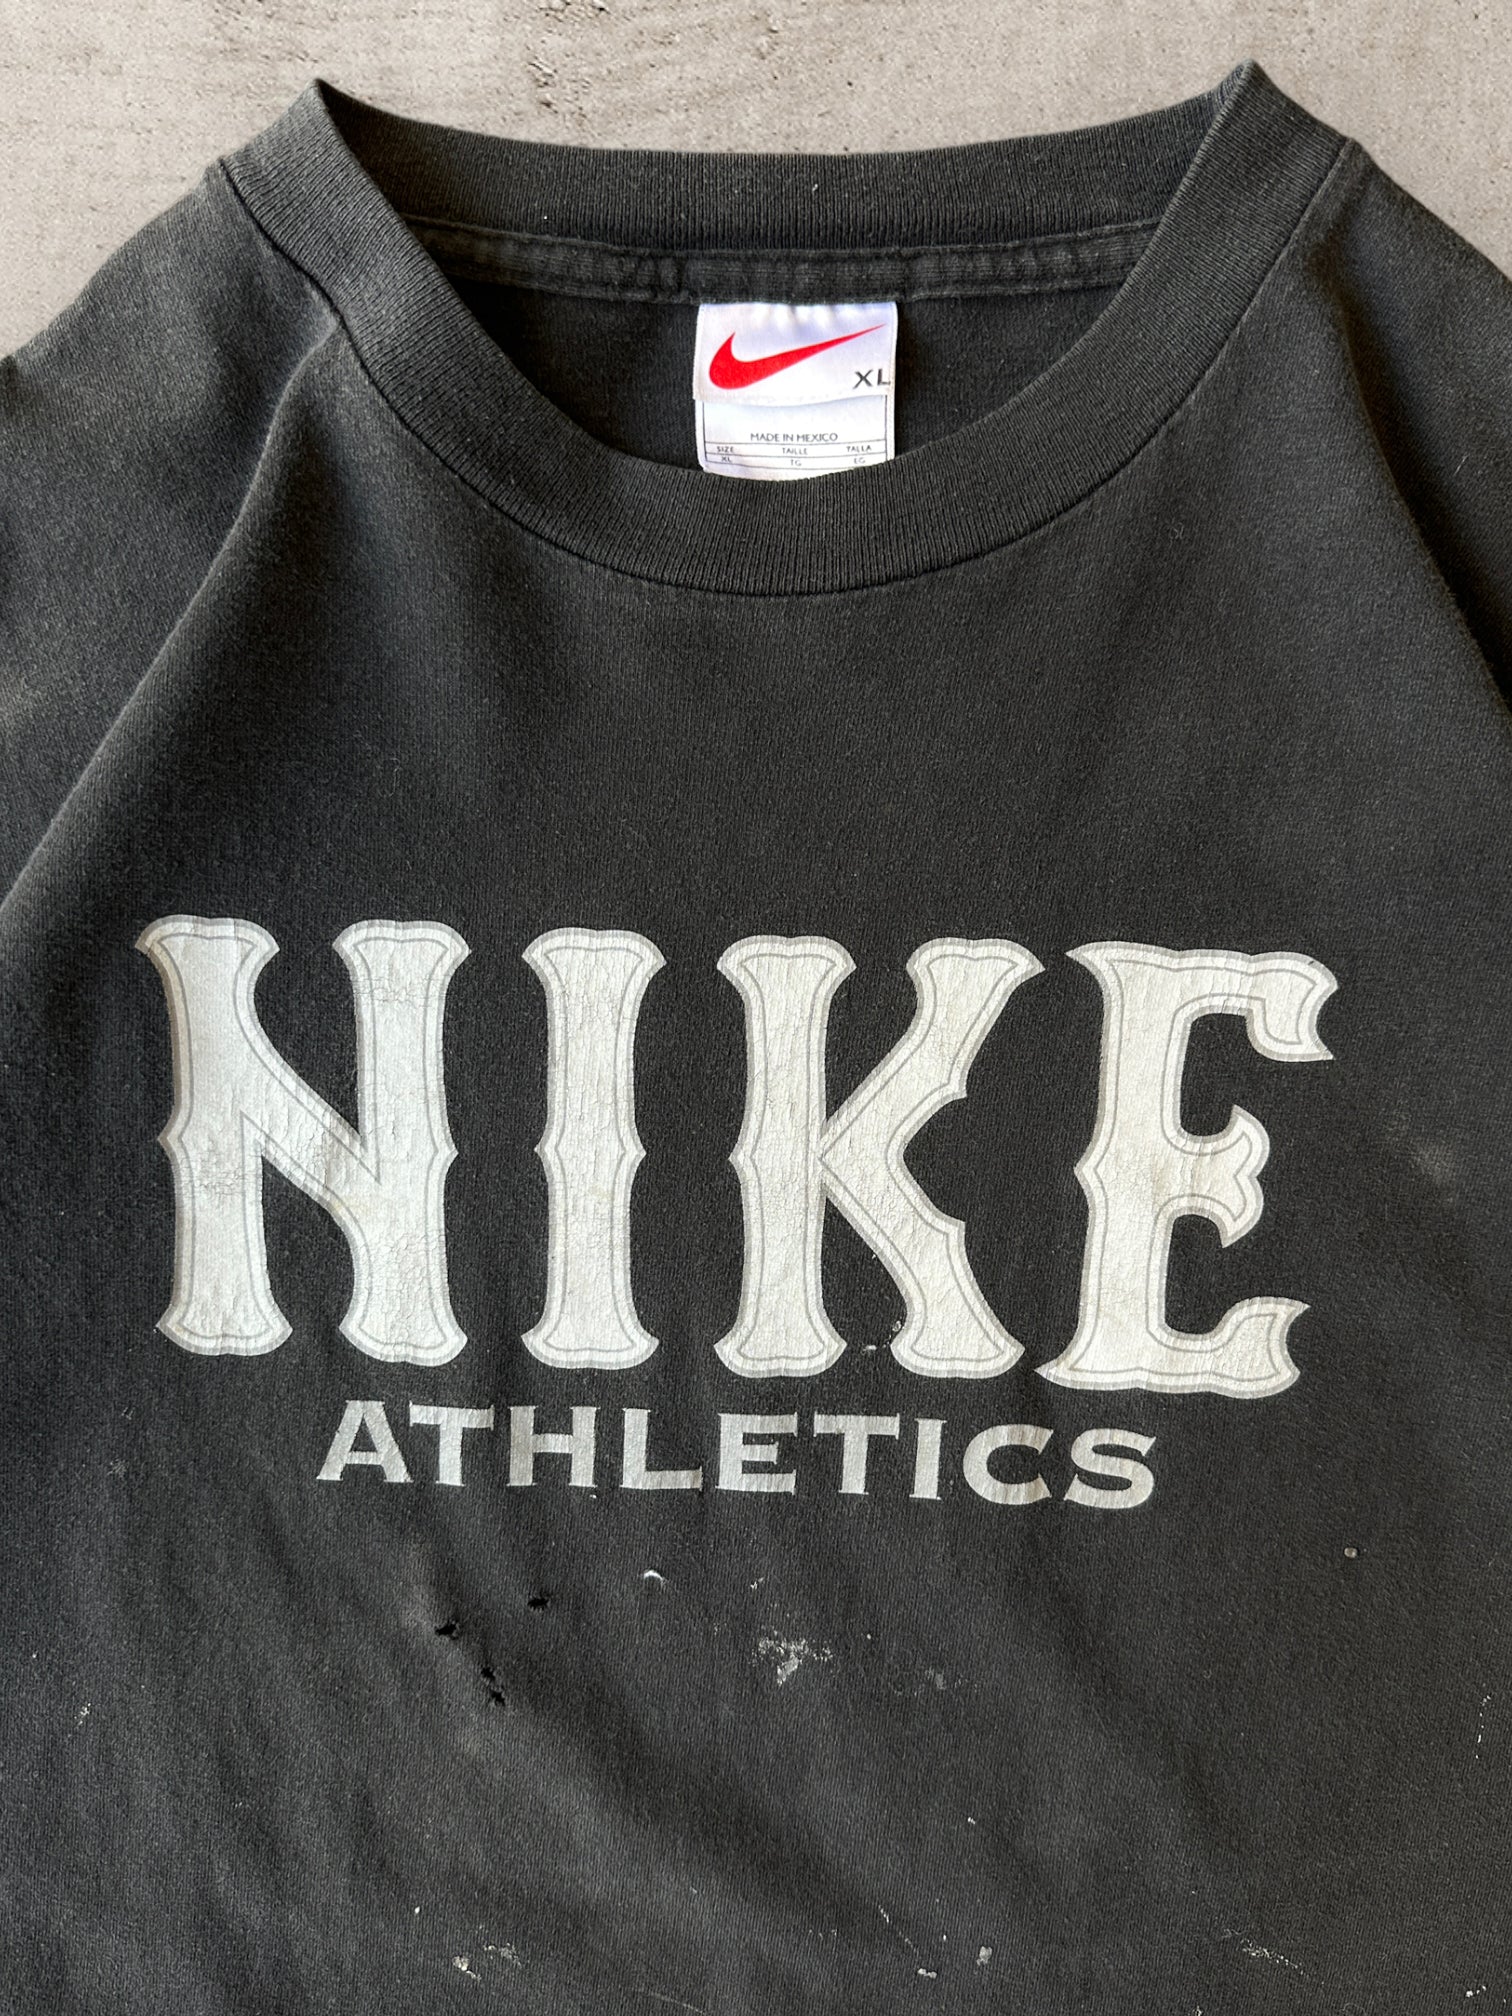 90s Nike Athletics Distressed T-Shirt - XL